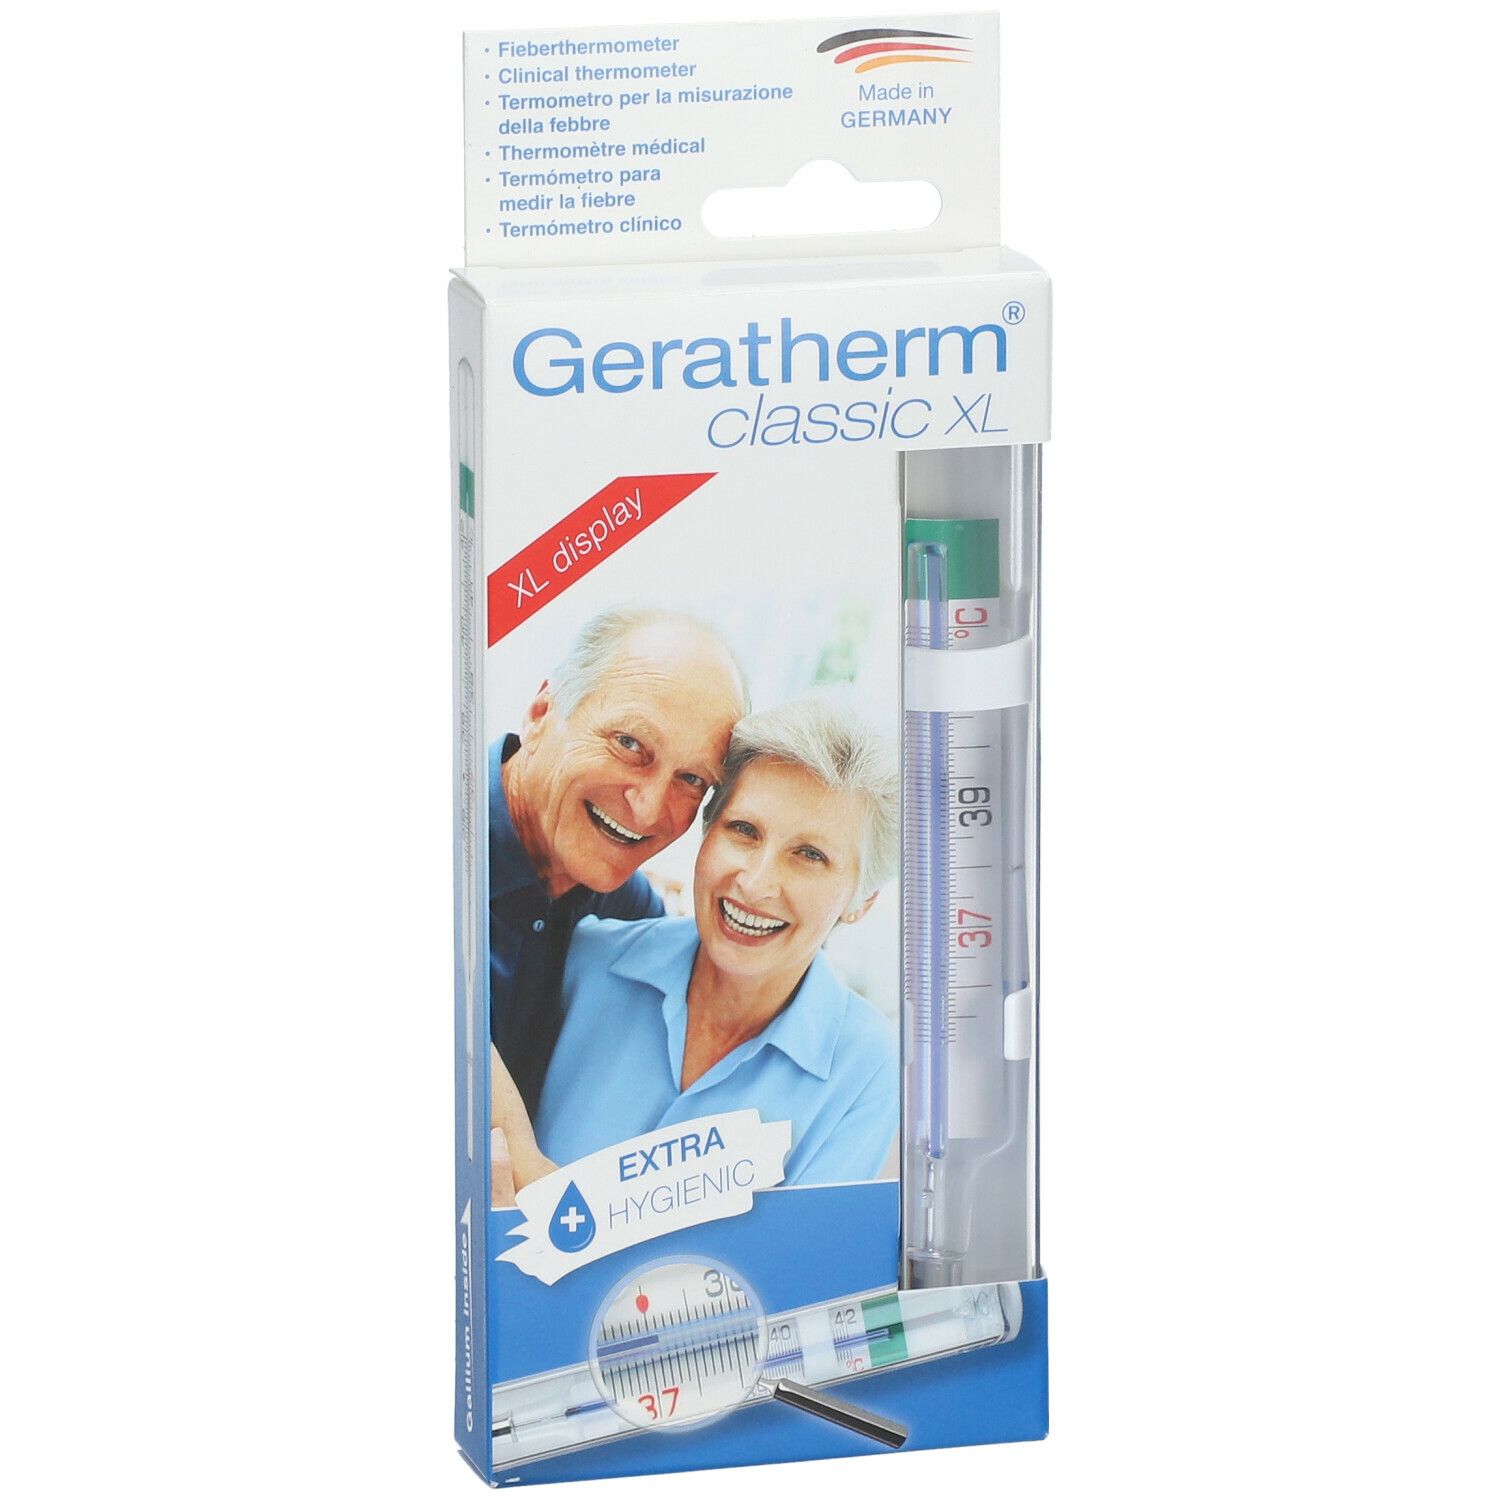 Geratherm® Classic XL